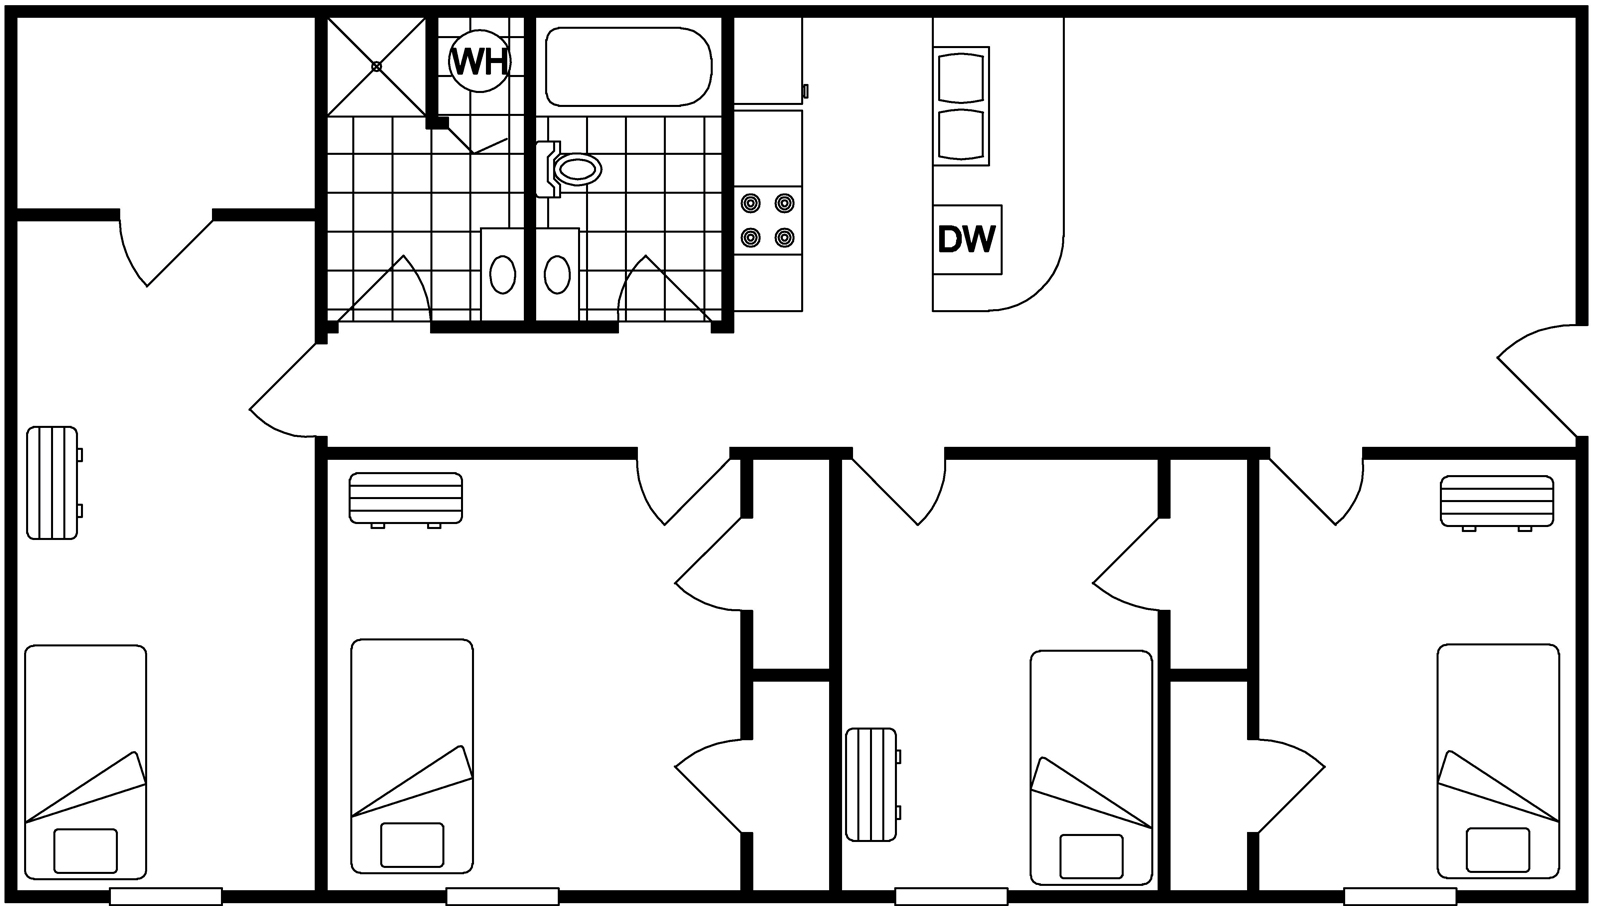 4 Bedroom Floor Plan Example B Illustration